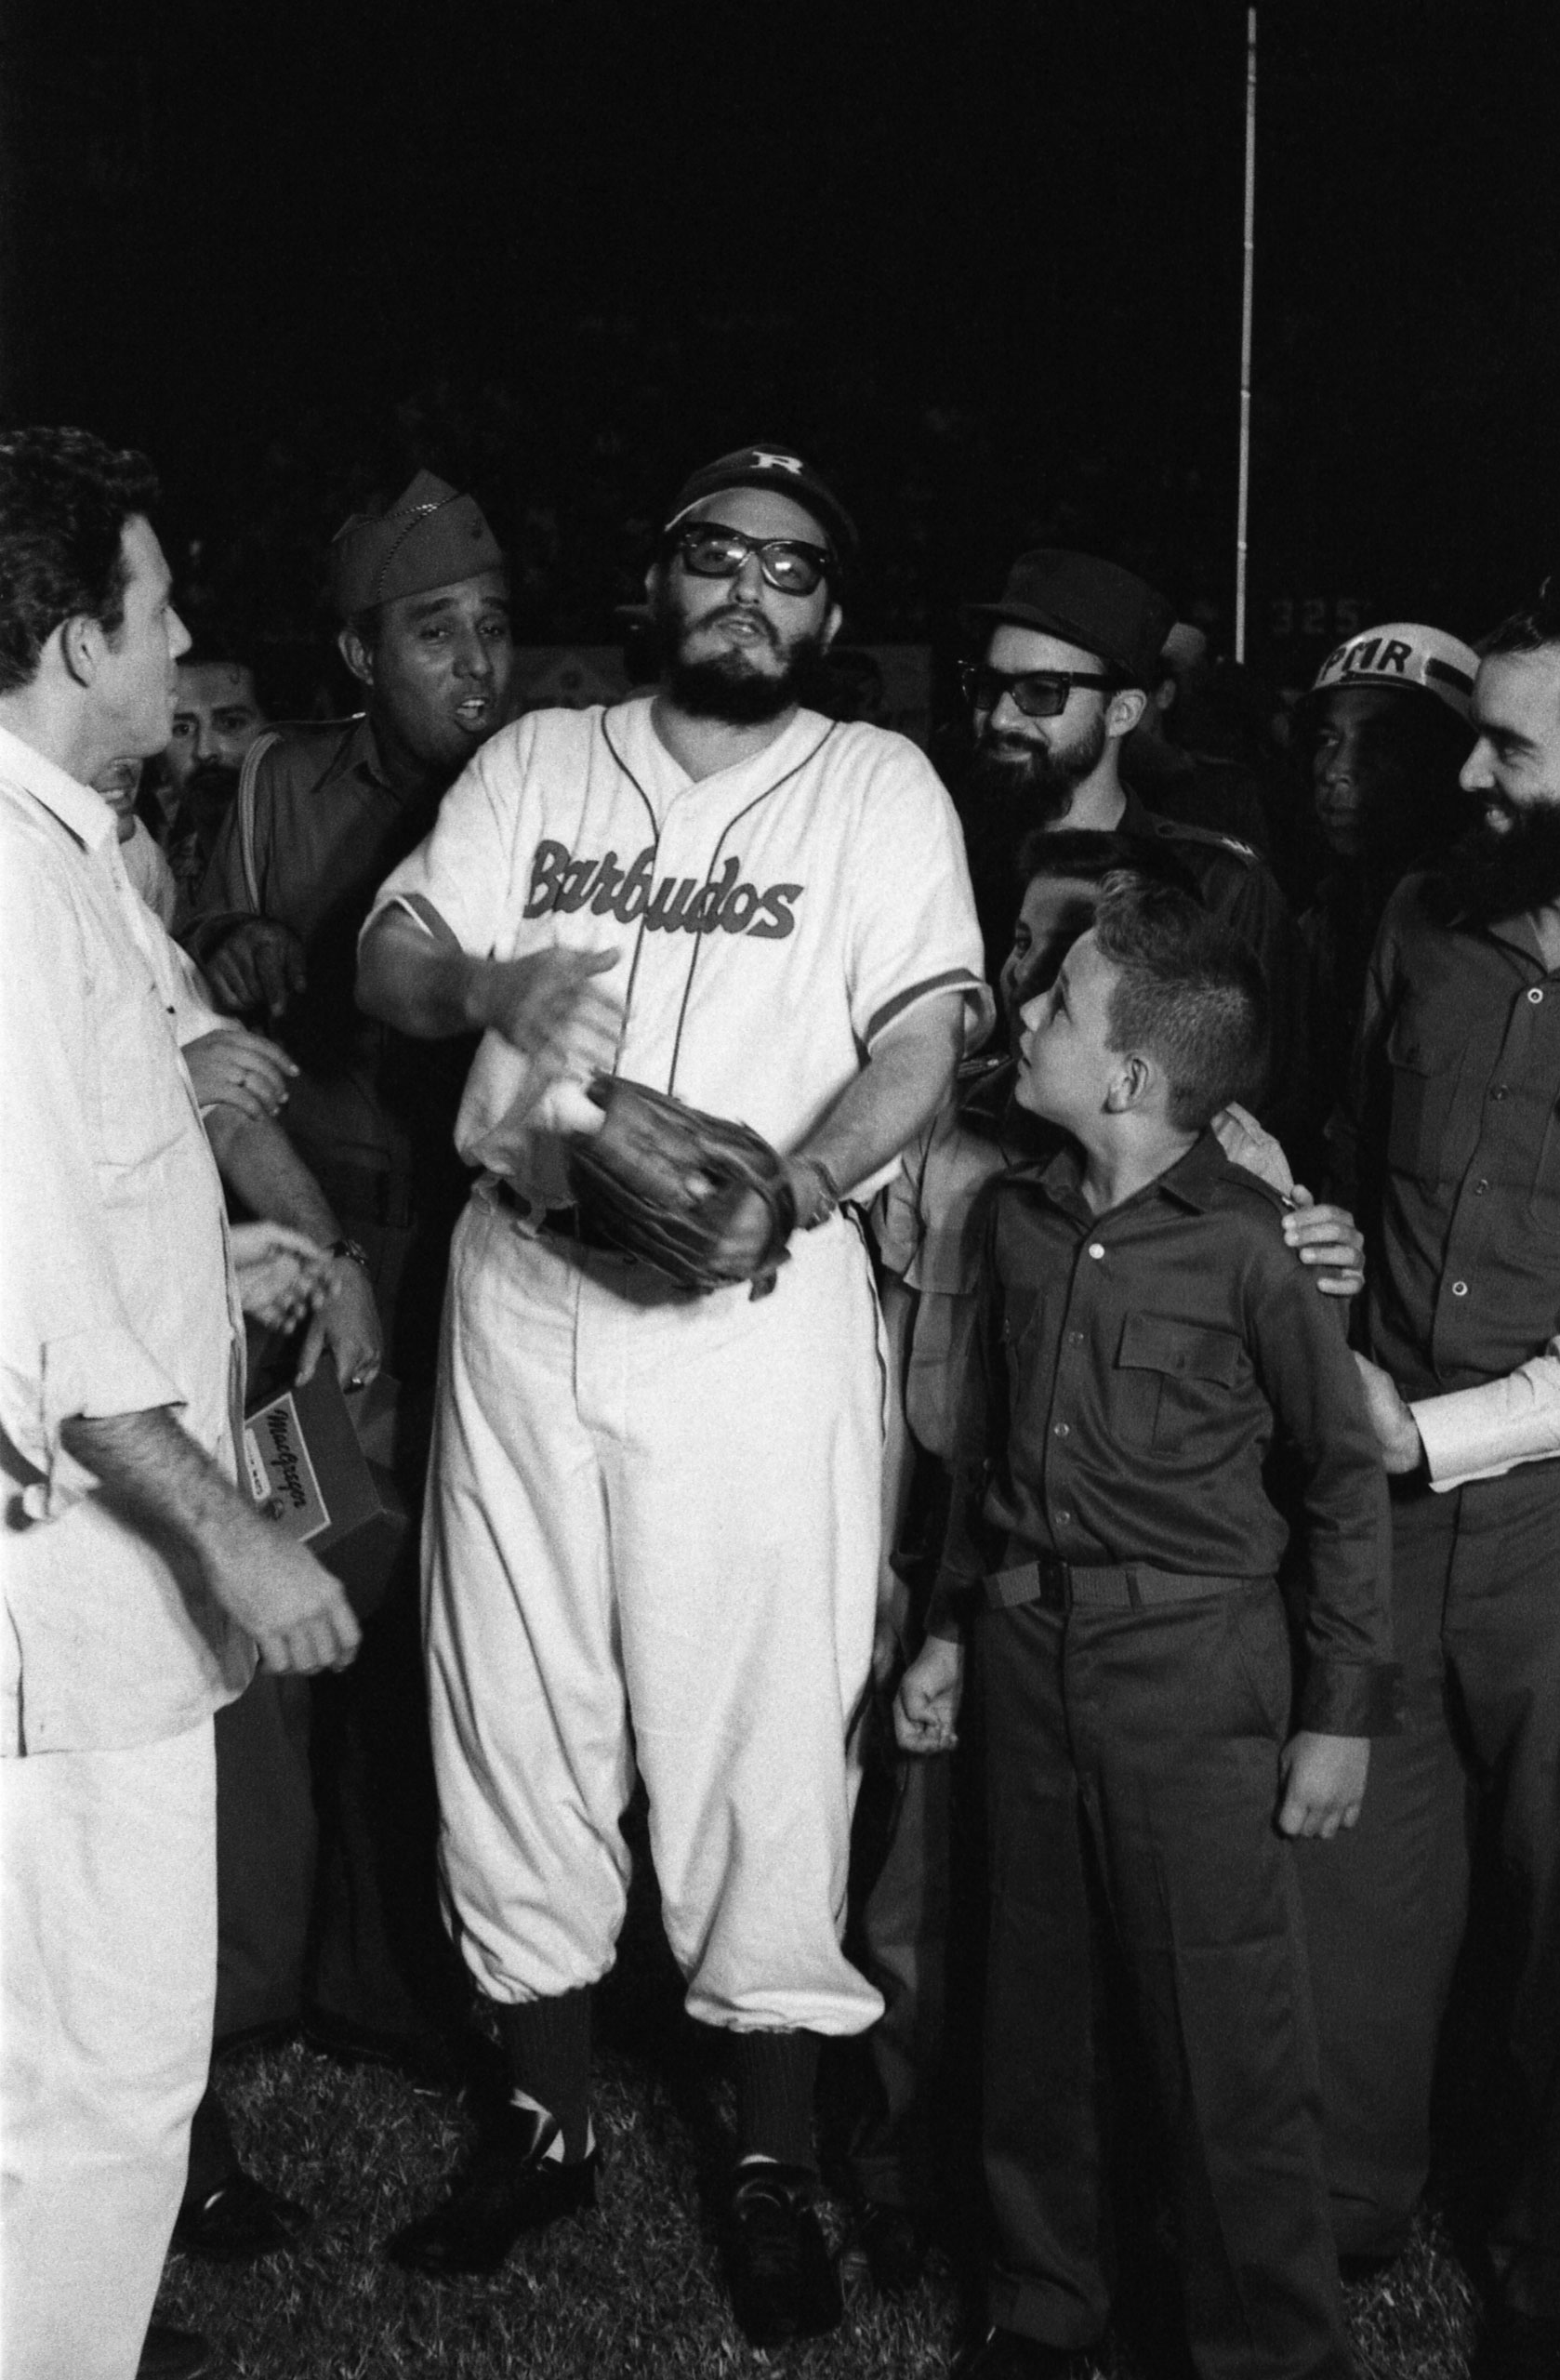 Fidel Castro at an exhibition baseball game, Cuba, 1959.